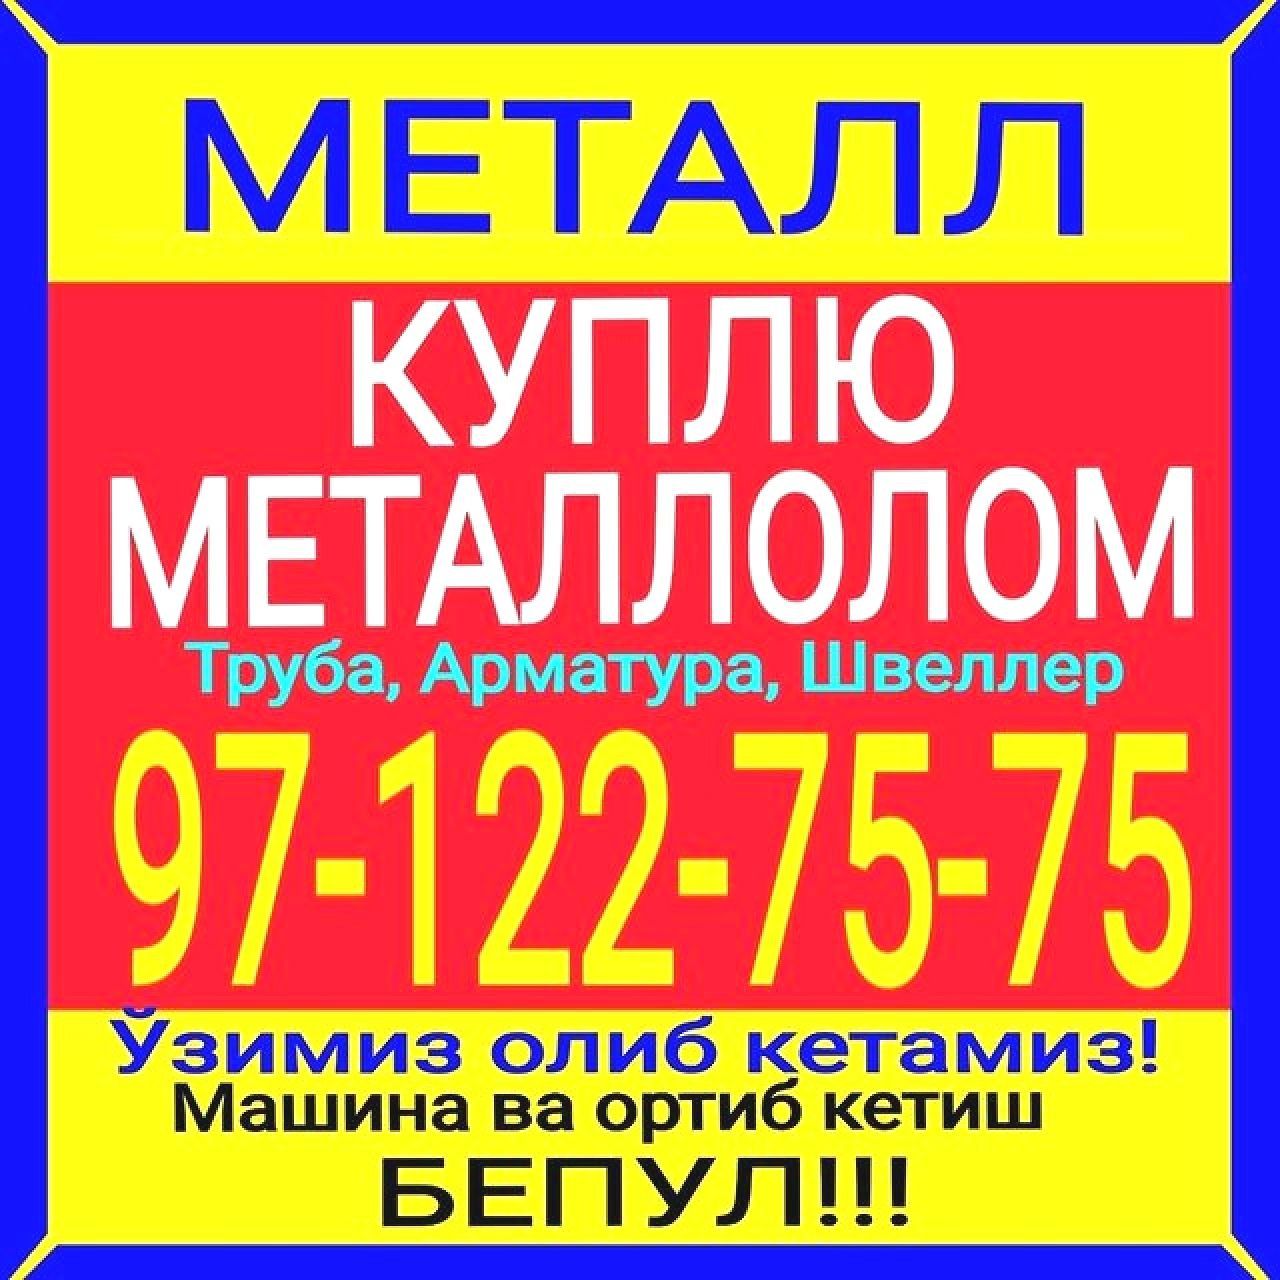 Куплю металлолом 97-122-75-75